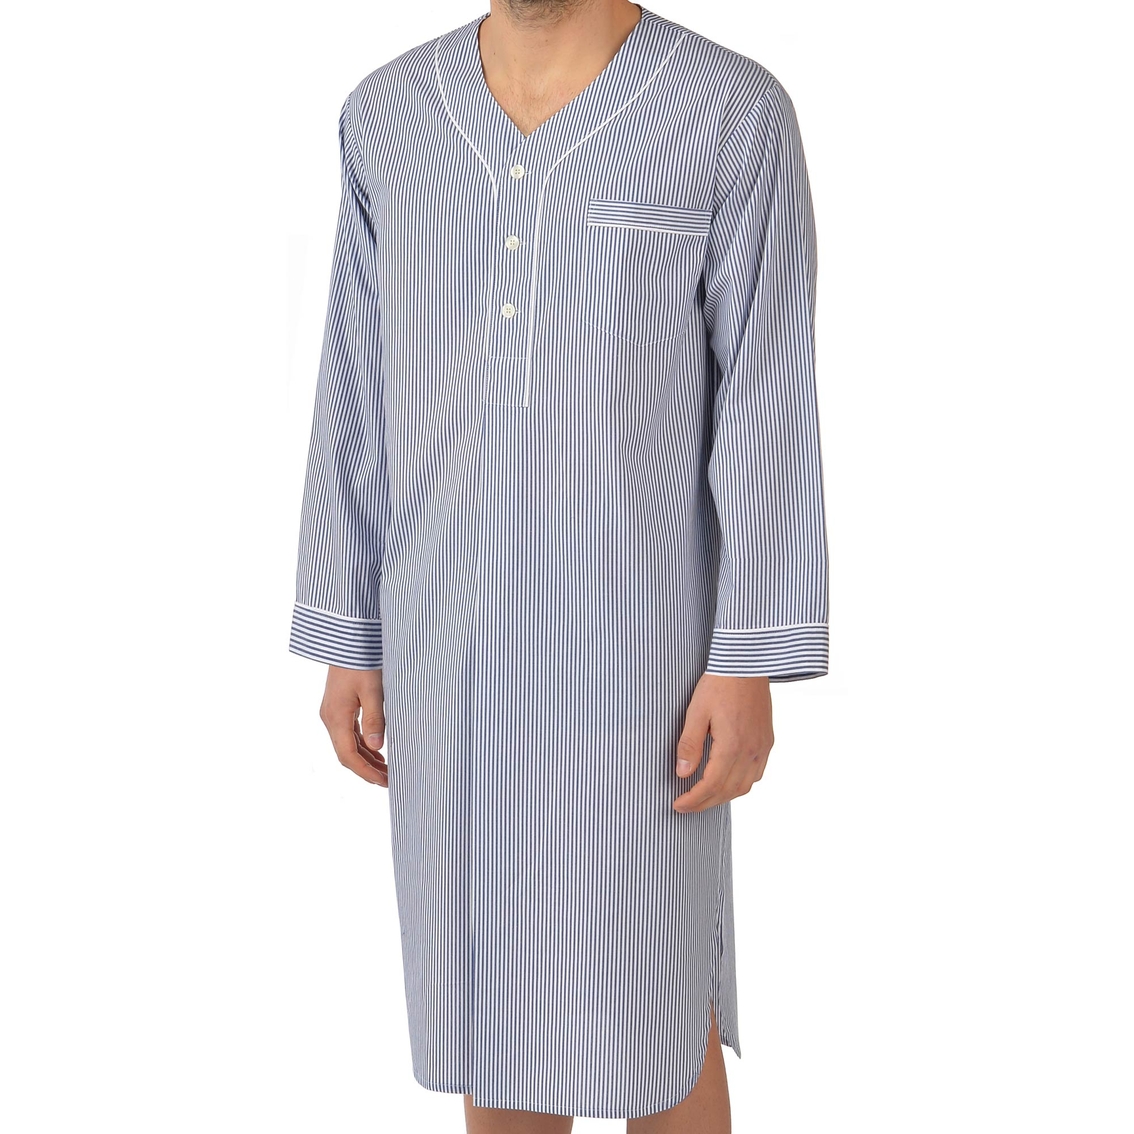 Majestic International Tall Cotton Nightshirt | Sleepwear & Lounge ...